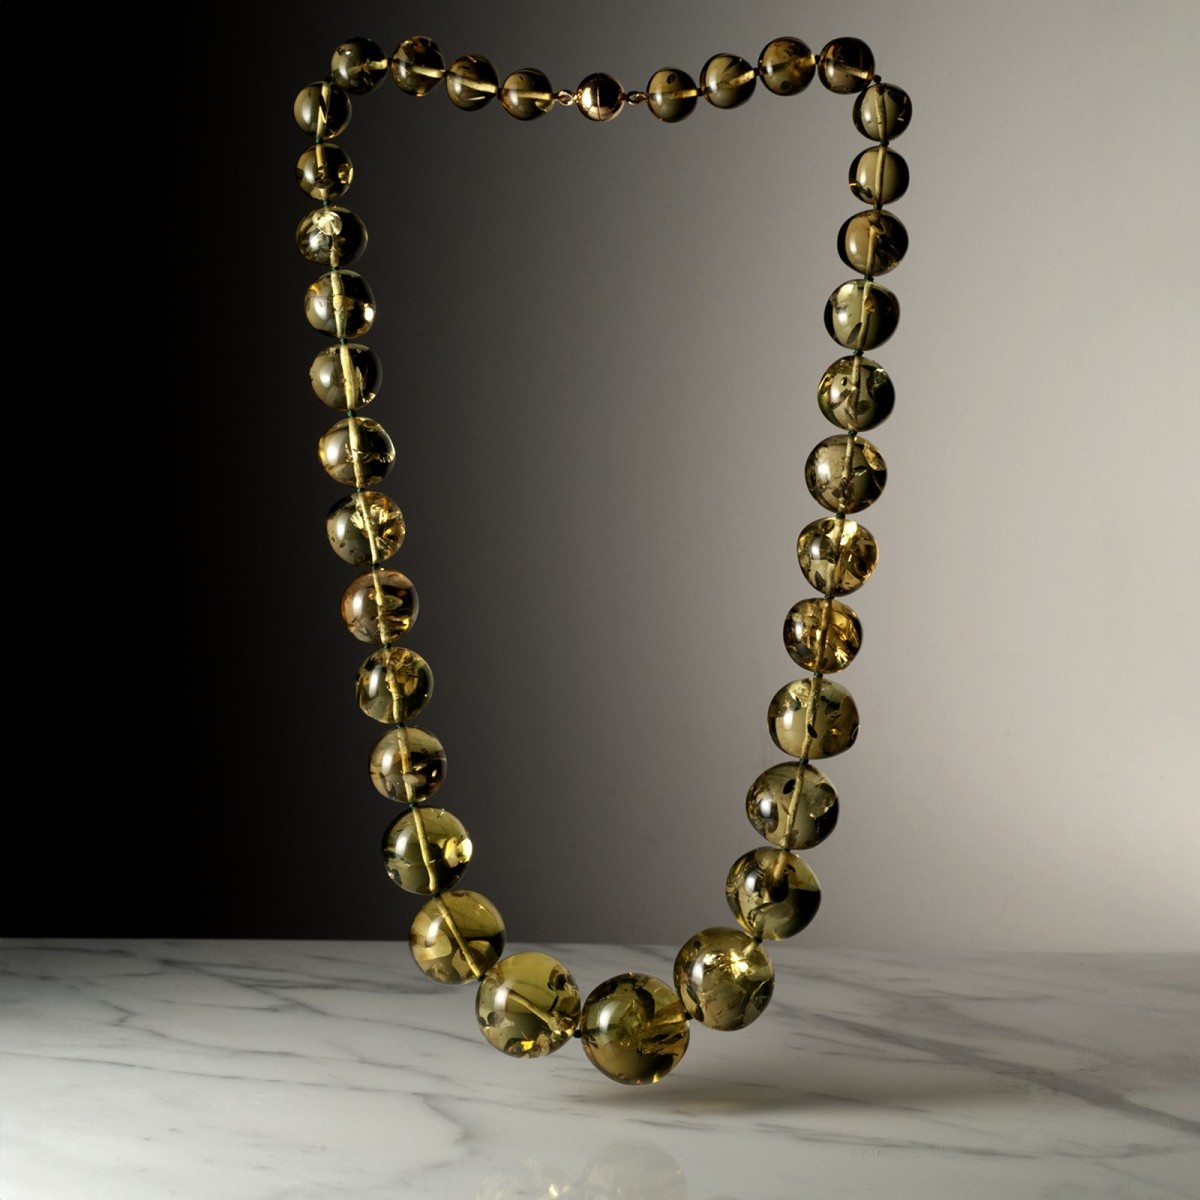 BANGKOK 2162 - Handmade necklace